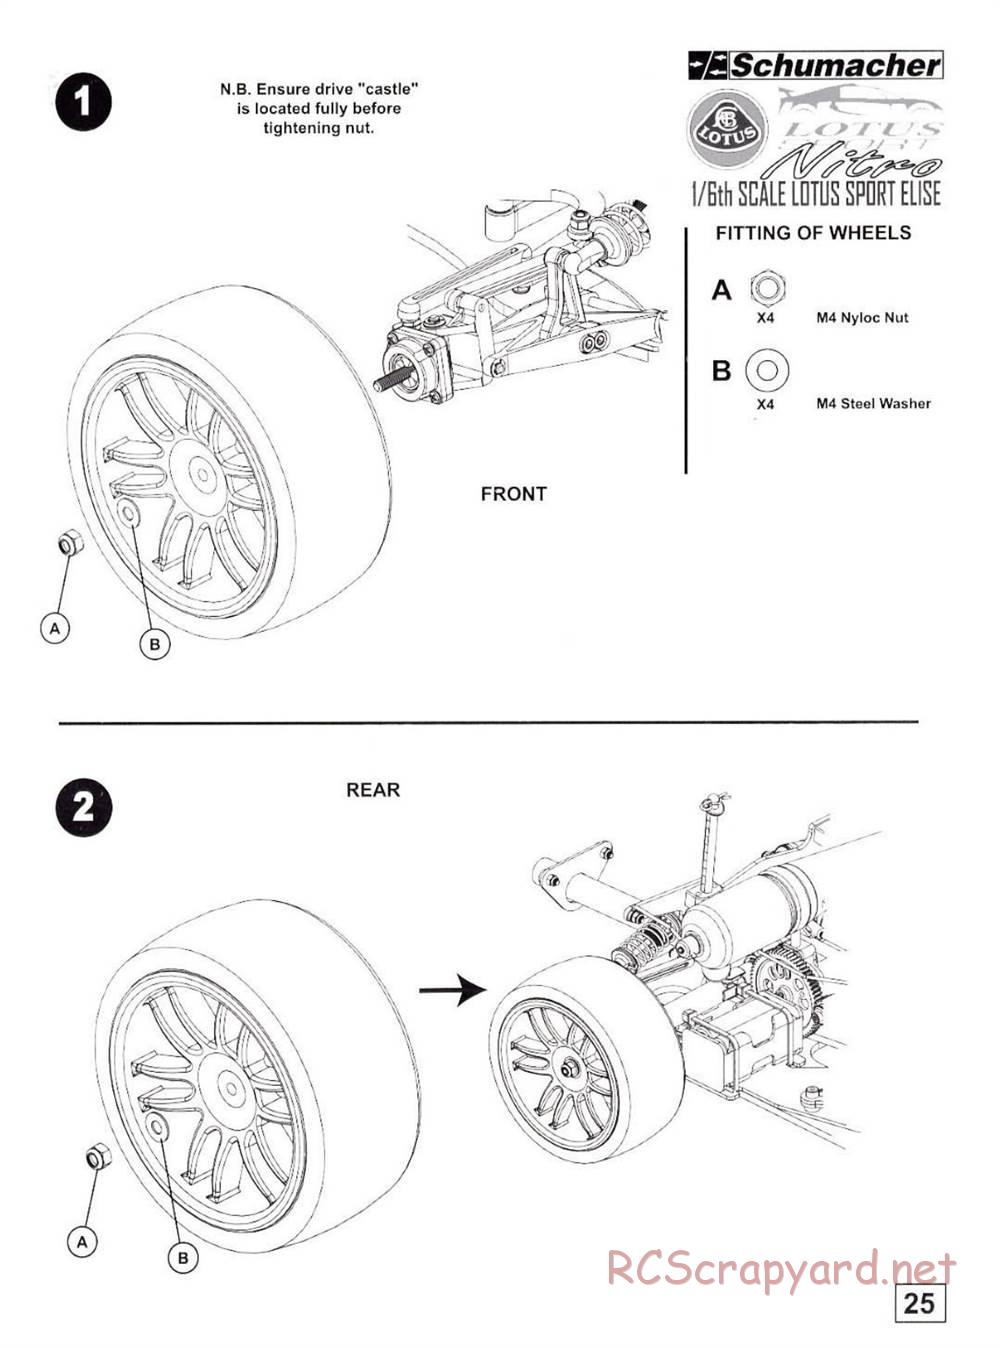 Schumacher - Big 6 Lotus Nitro - Manual - Page 27